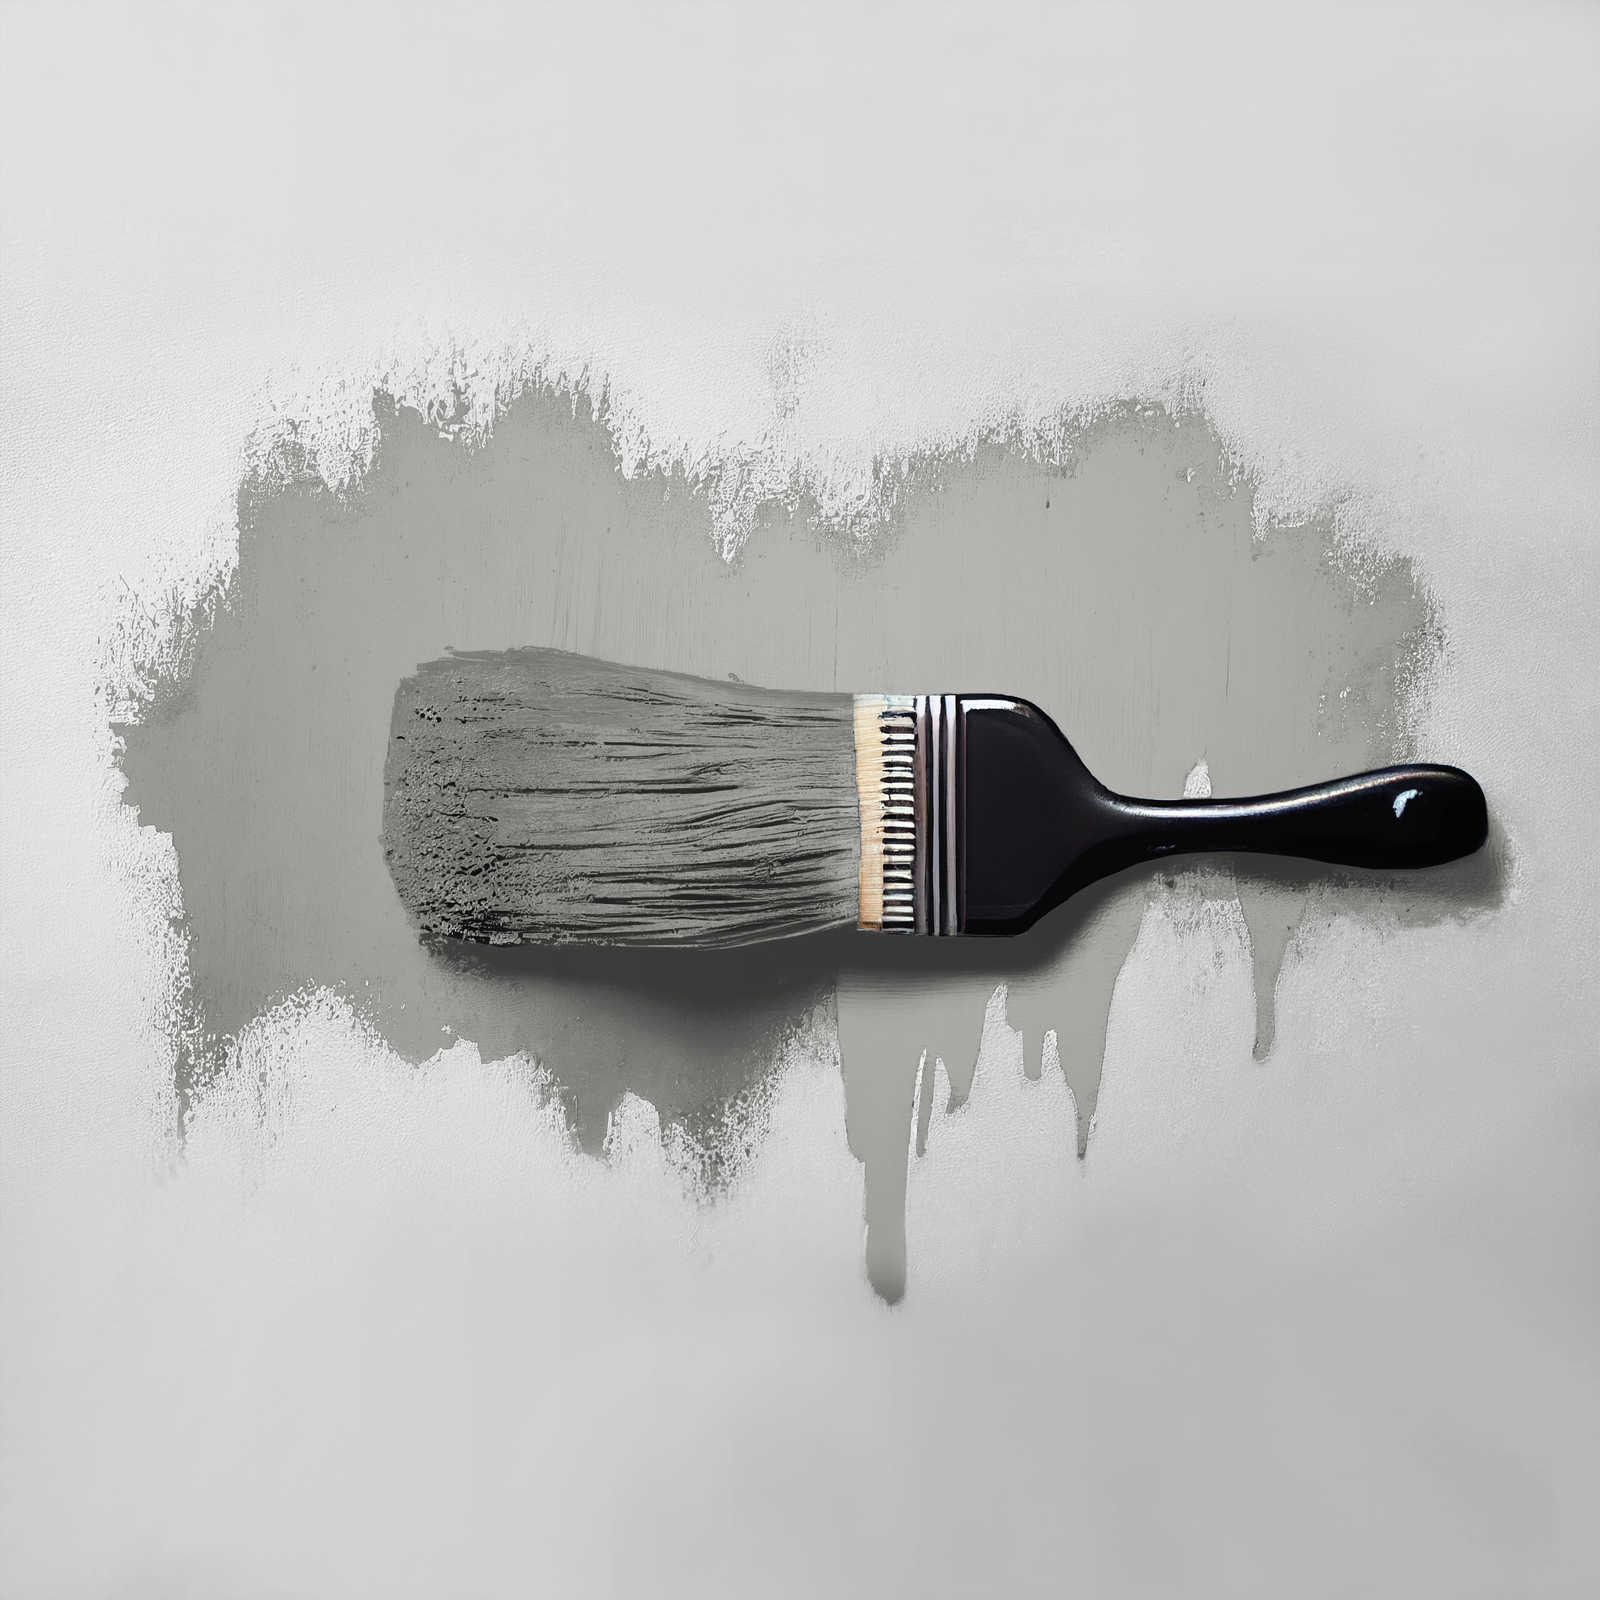             Wall Paint TCK1010 »Grey Salt« in neutral grey – 2.5 litre
        